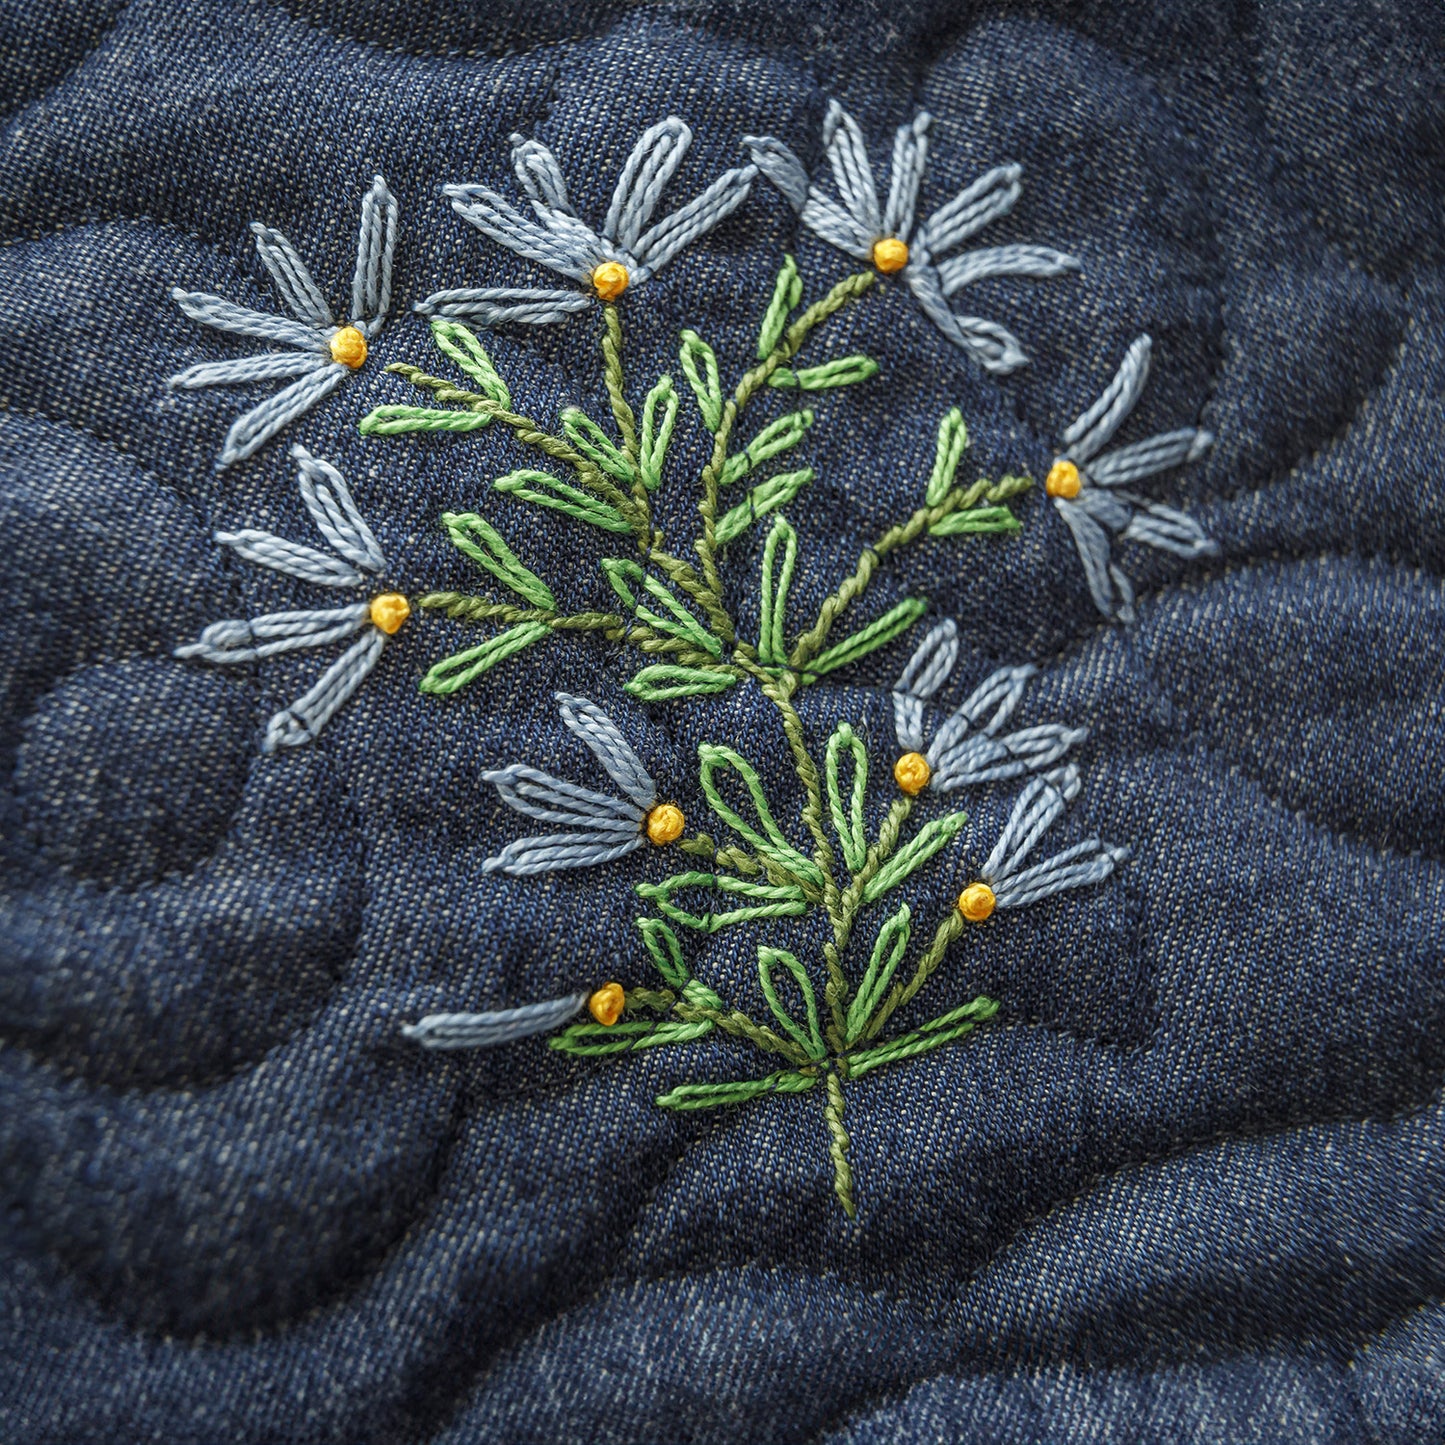 PREORDER - Ingrid's Wildflowers - An Heirloom Embroidery Kit by Missouri Star Alternative View #34